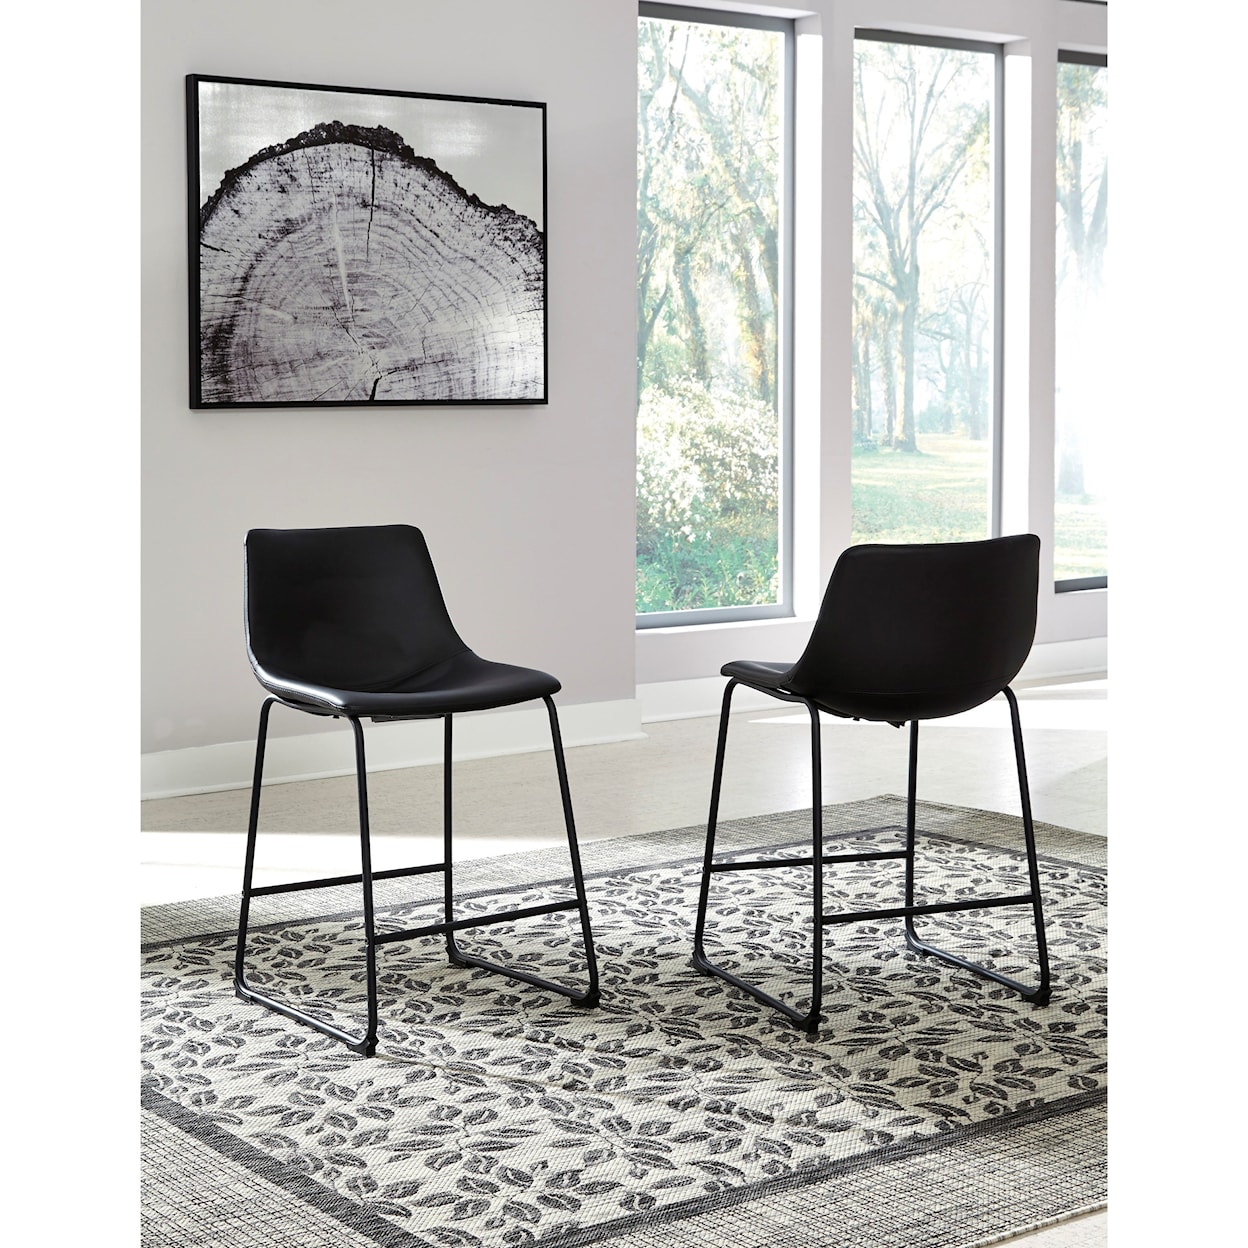 Signature Design by Ashley Furniture Centiar Upholstered Barstool